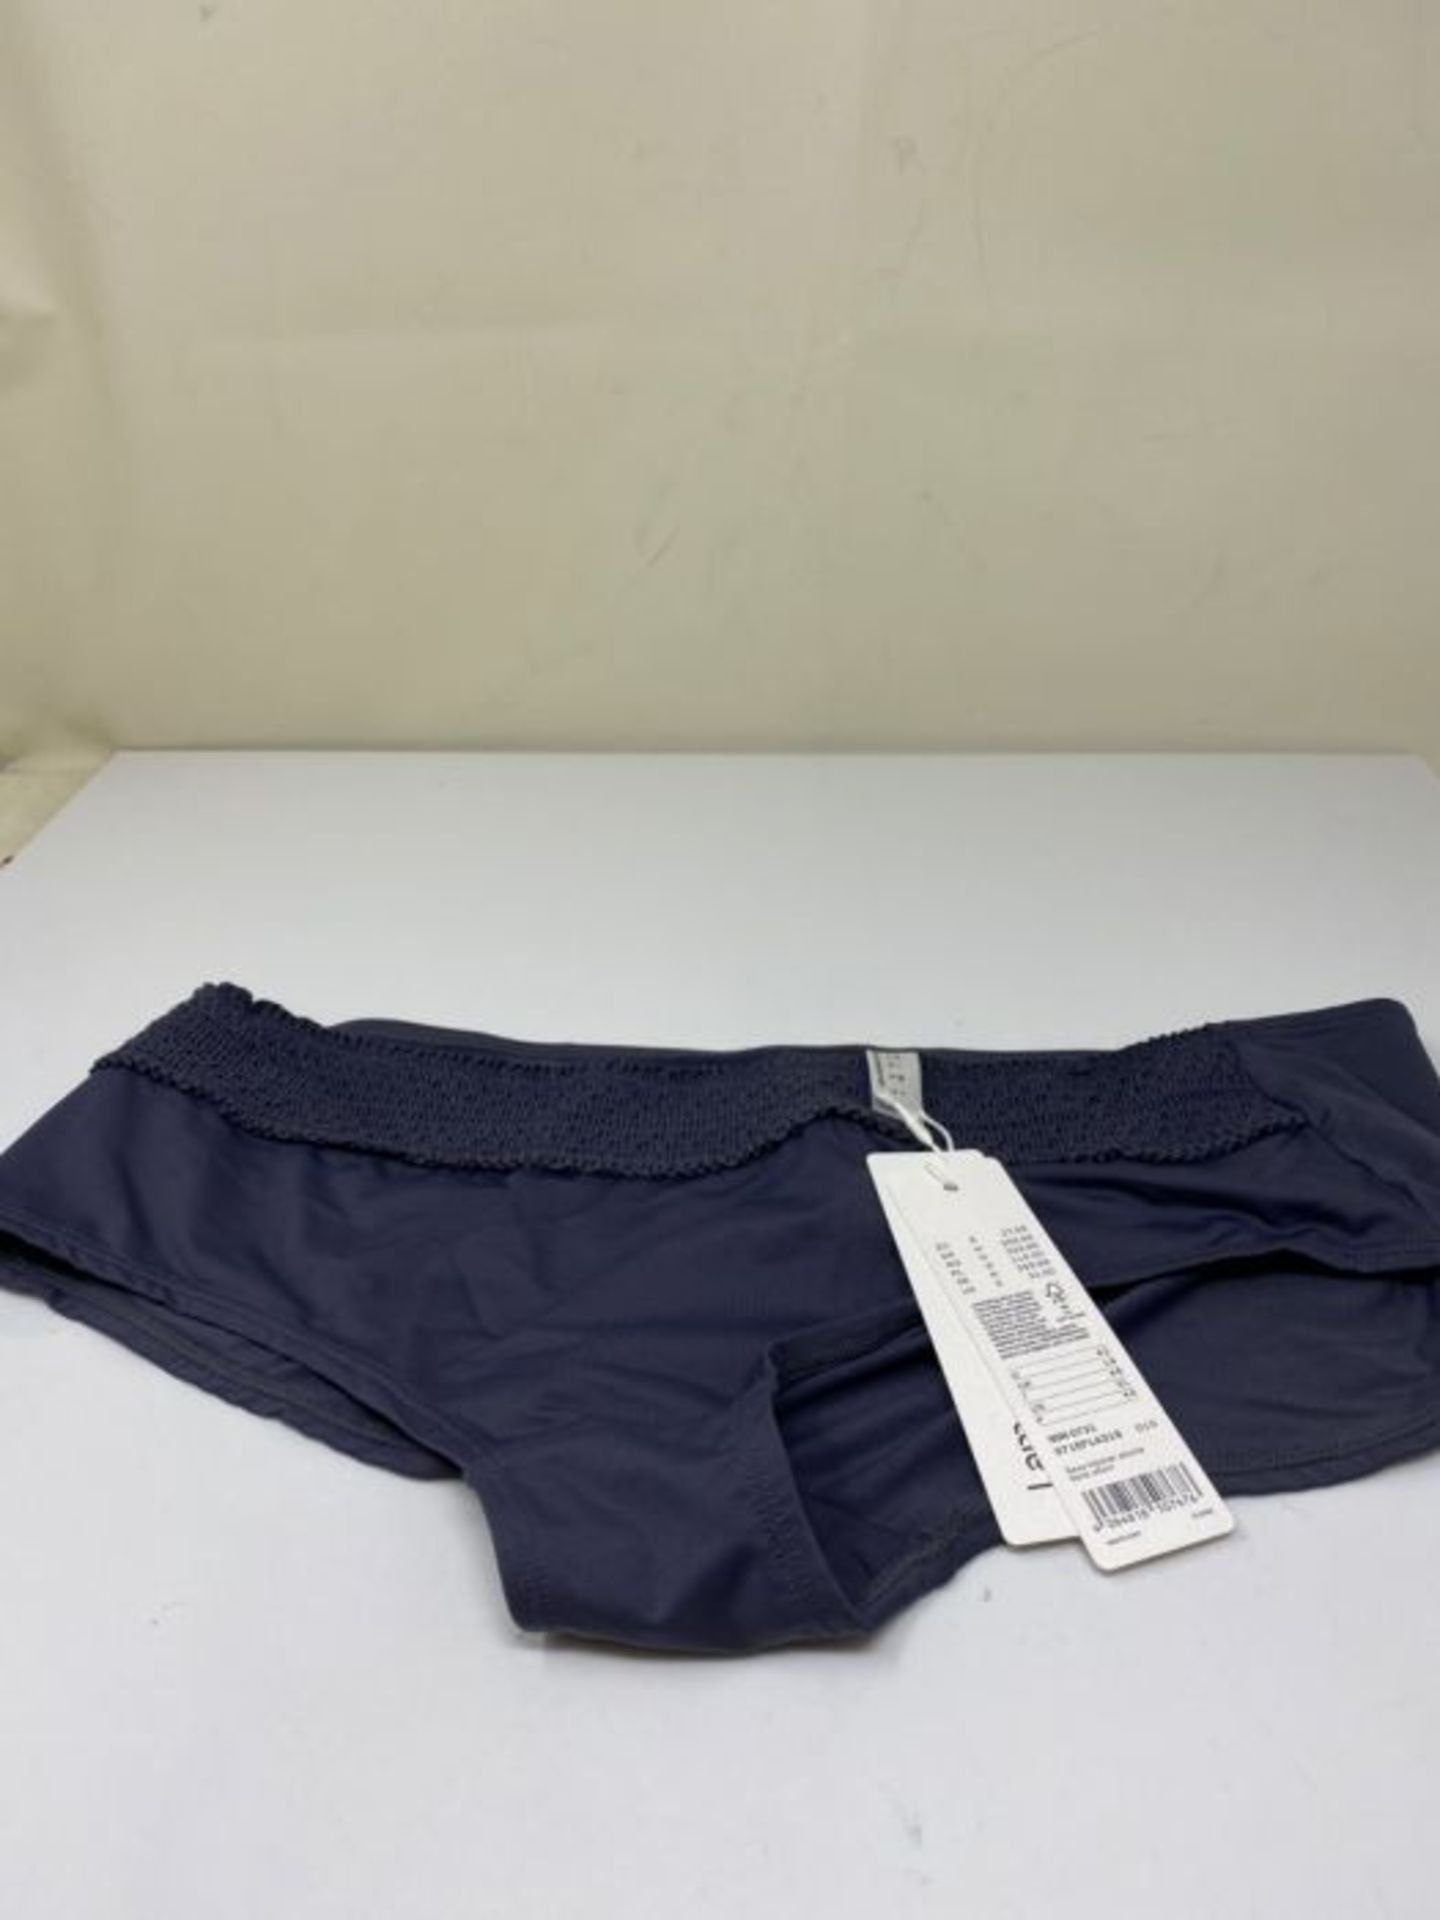 RRP £50.00 ESPRIT Women's Blue Beach NYR Sexy Hipster Shorts Bikini Bottoms, 10, 12 - Image 3 of 3